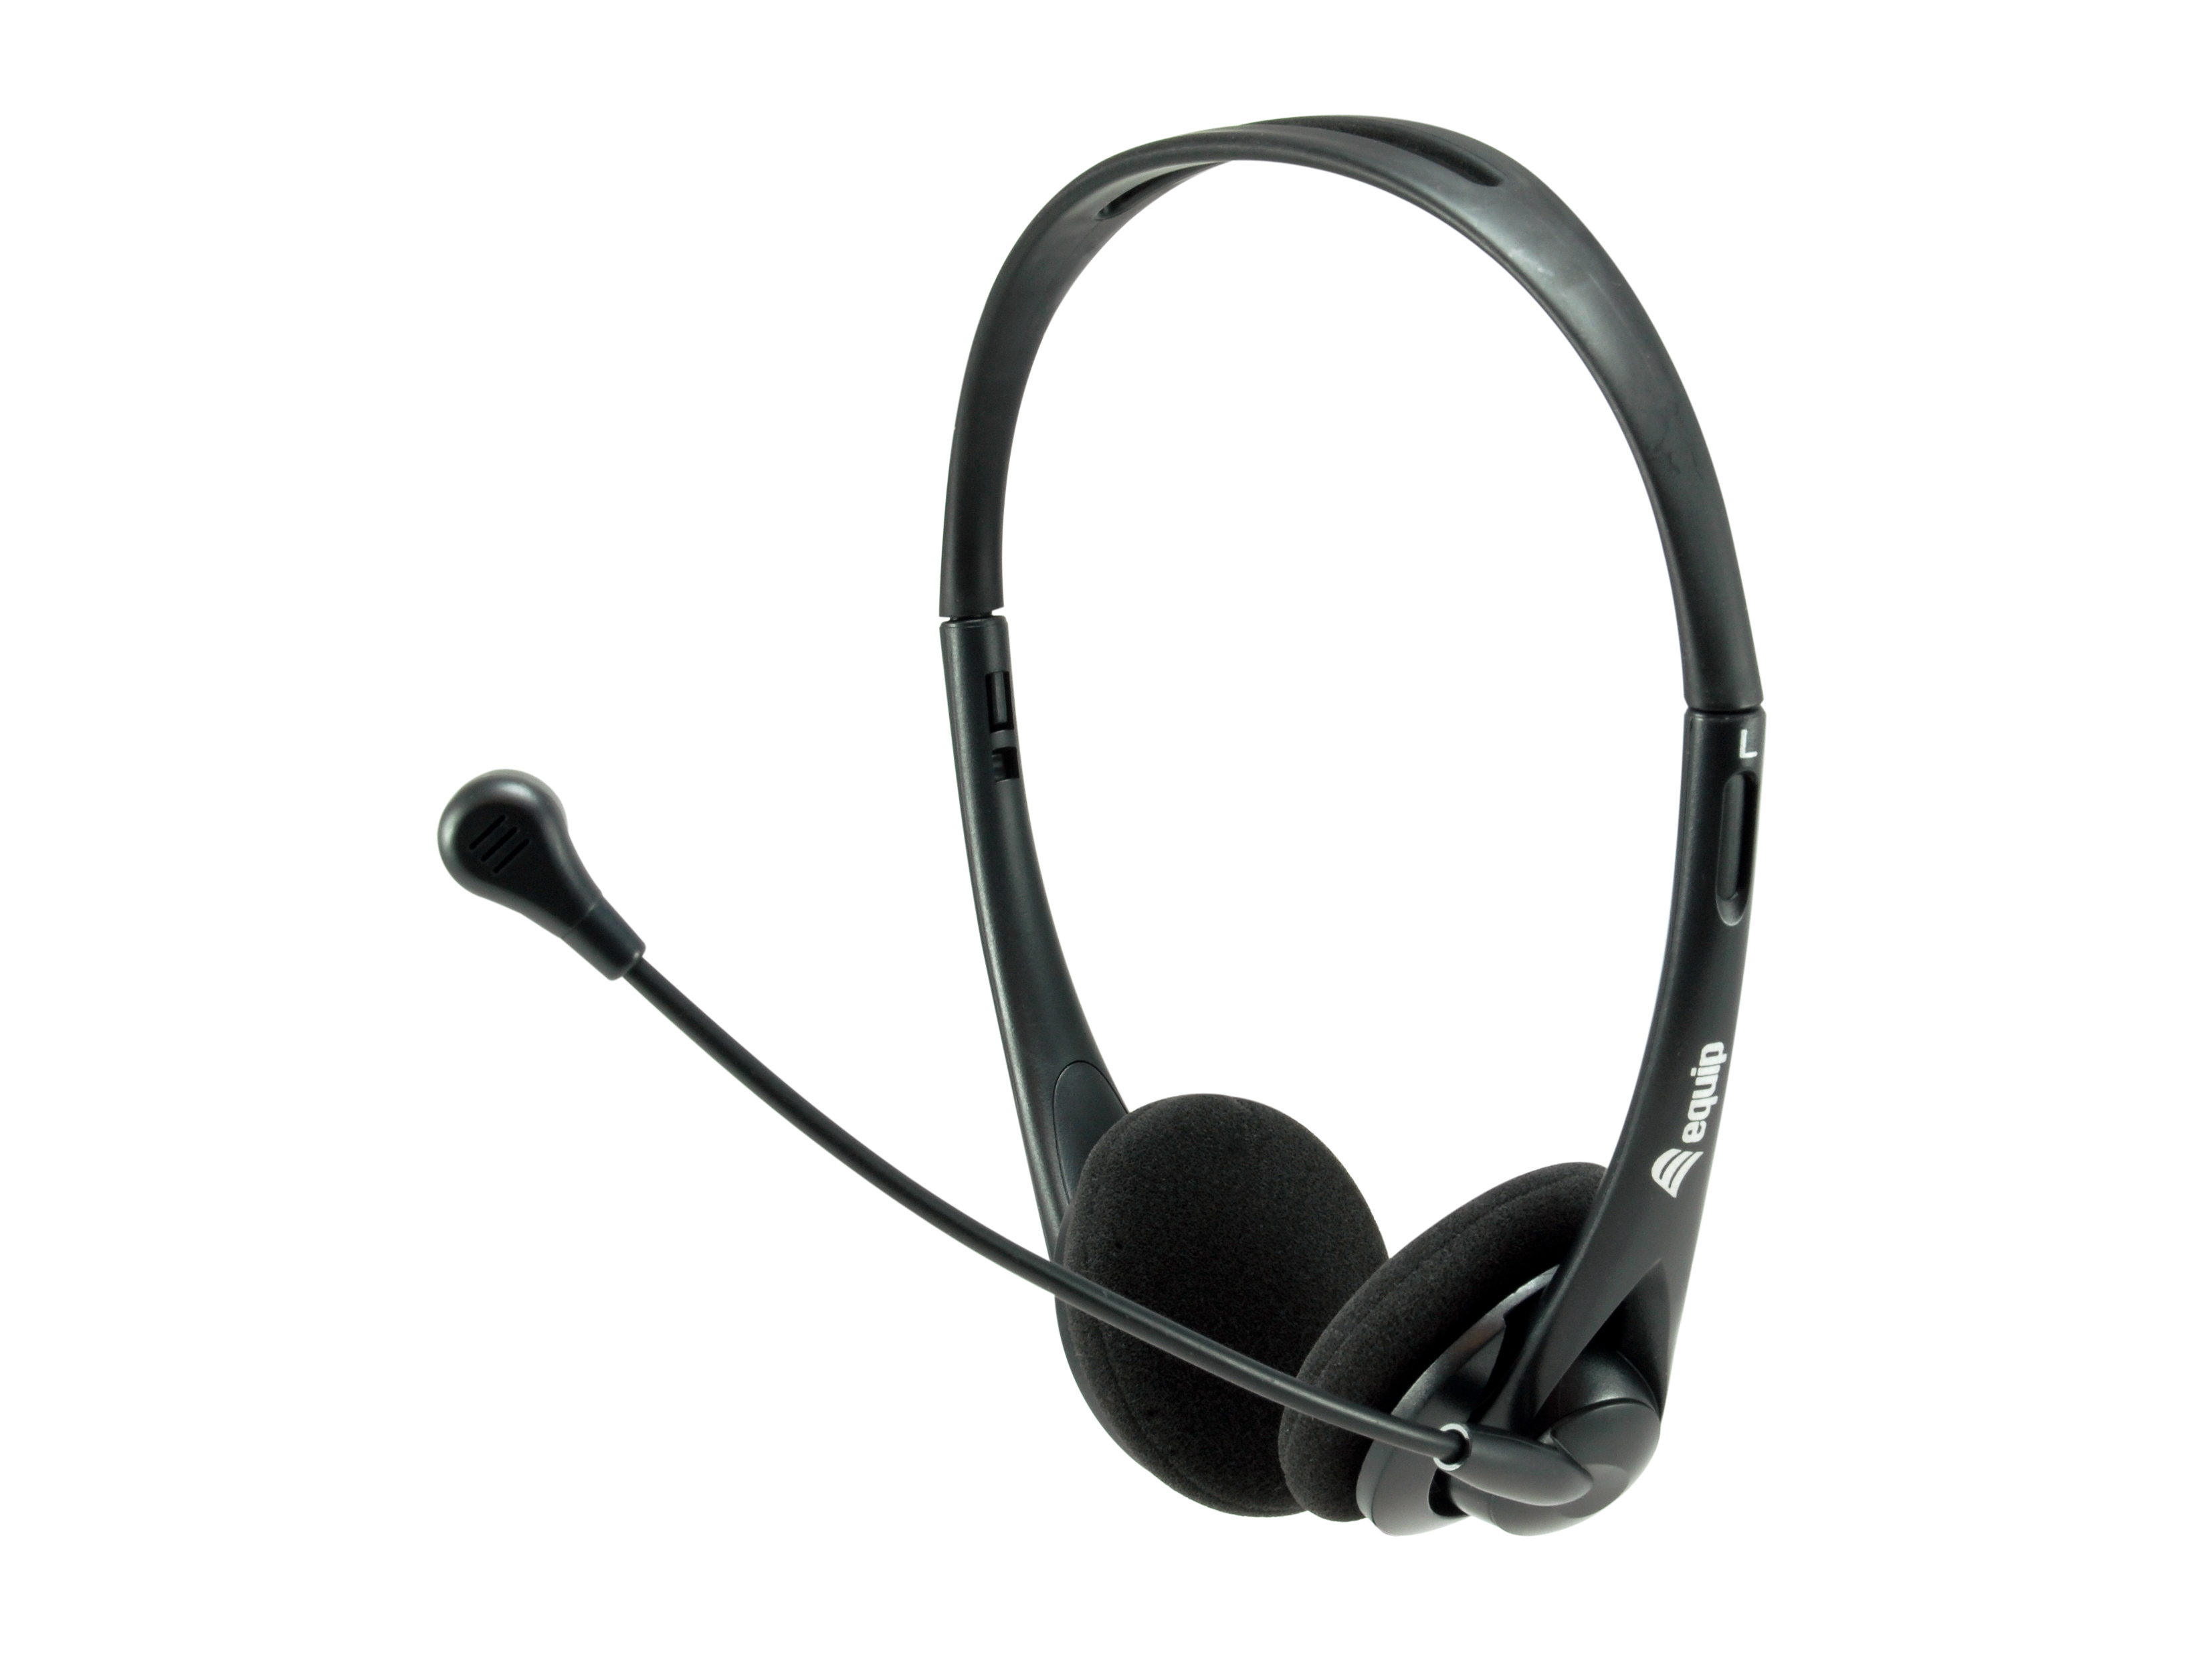 Equip 245305 - Headset - On-Ear - kabelgebunden